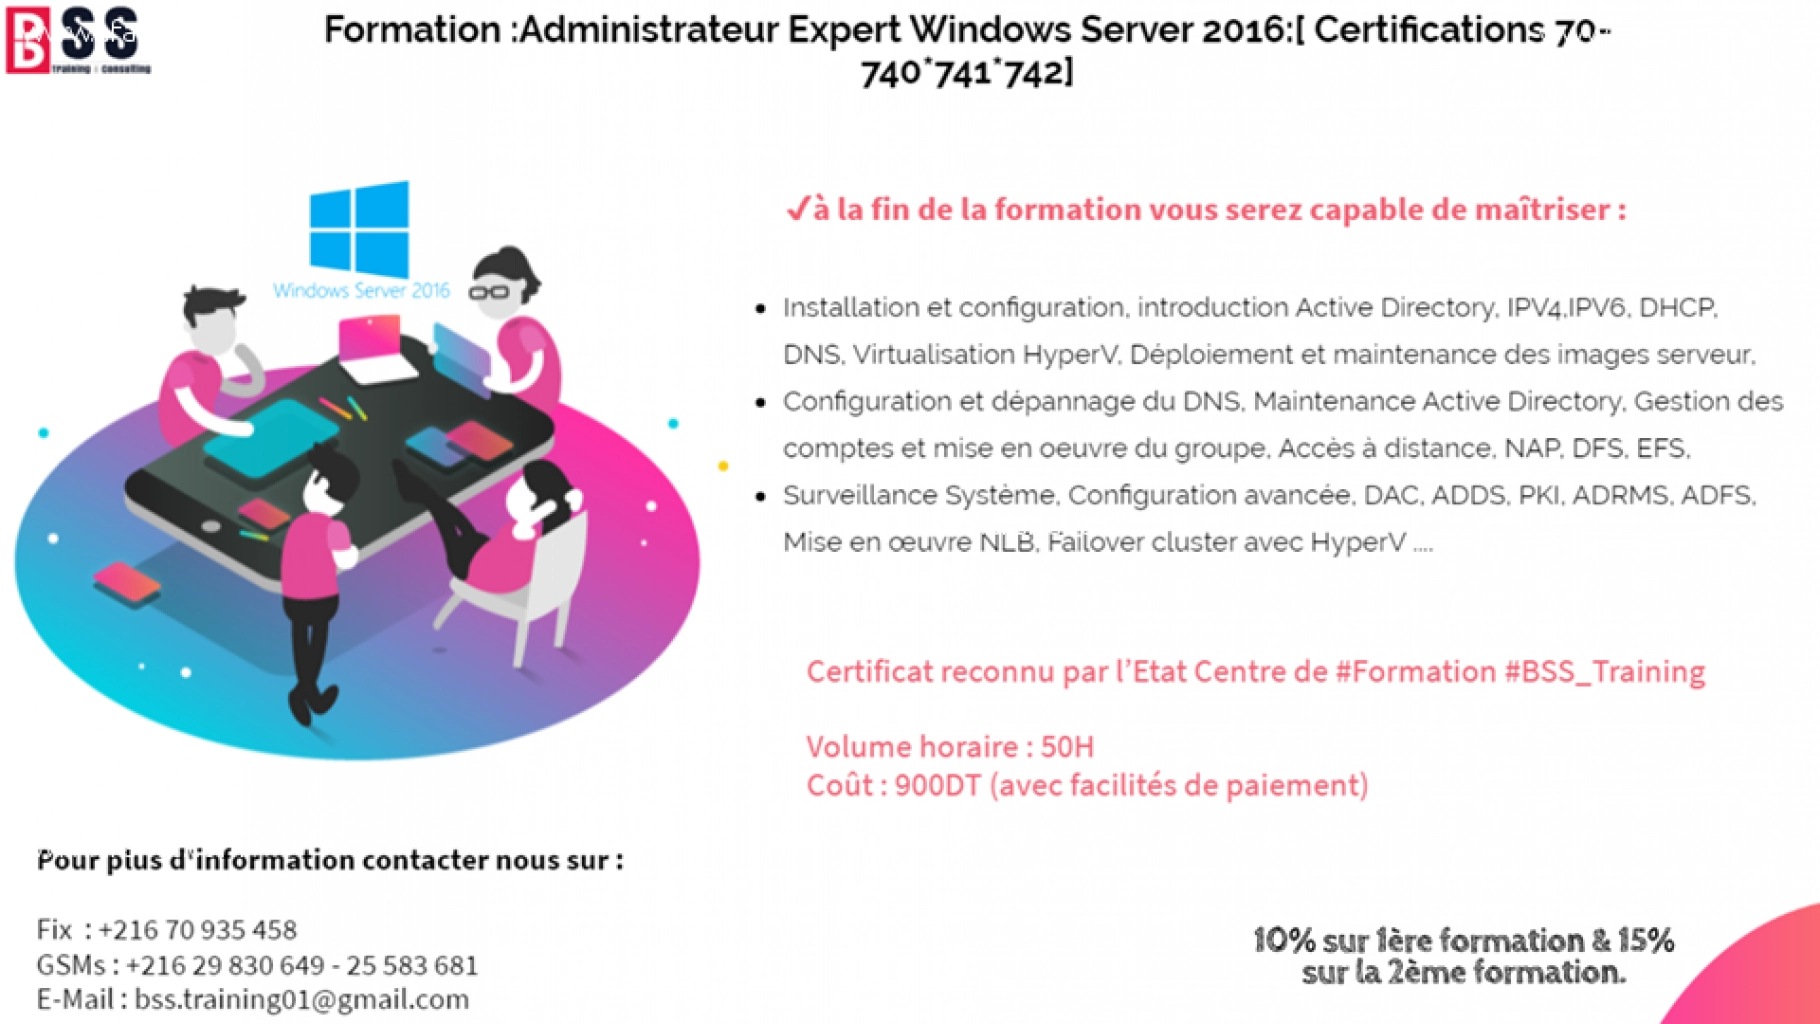 Formation: Administrateur Expert Windows Server 2016